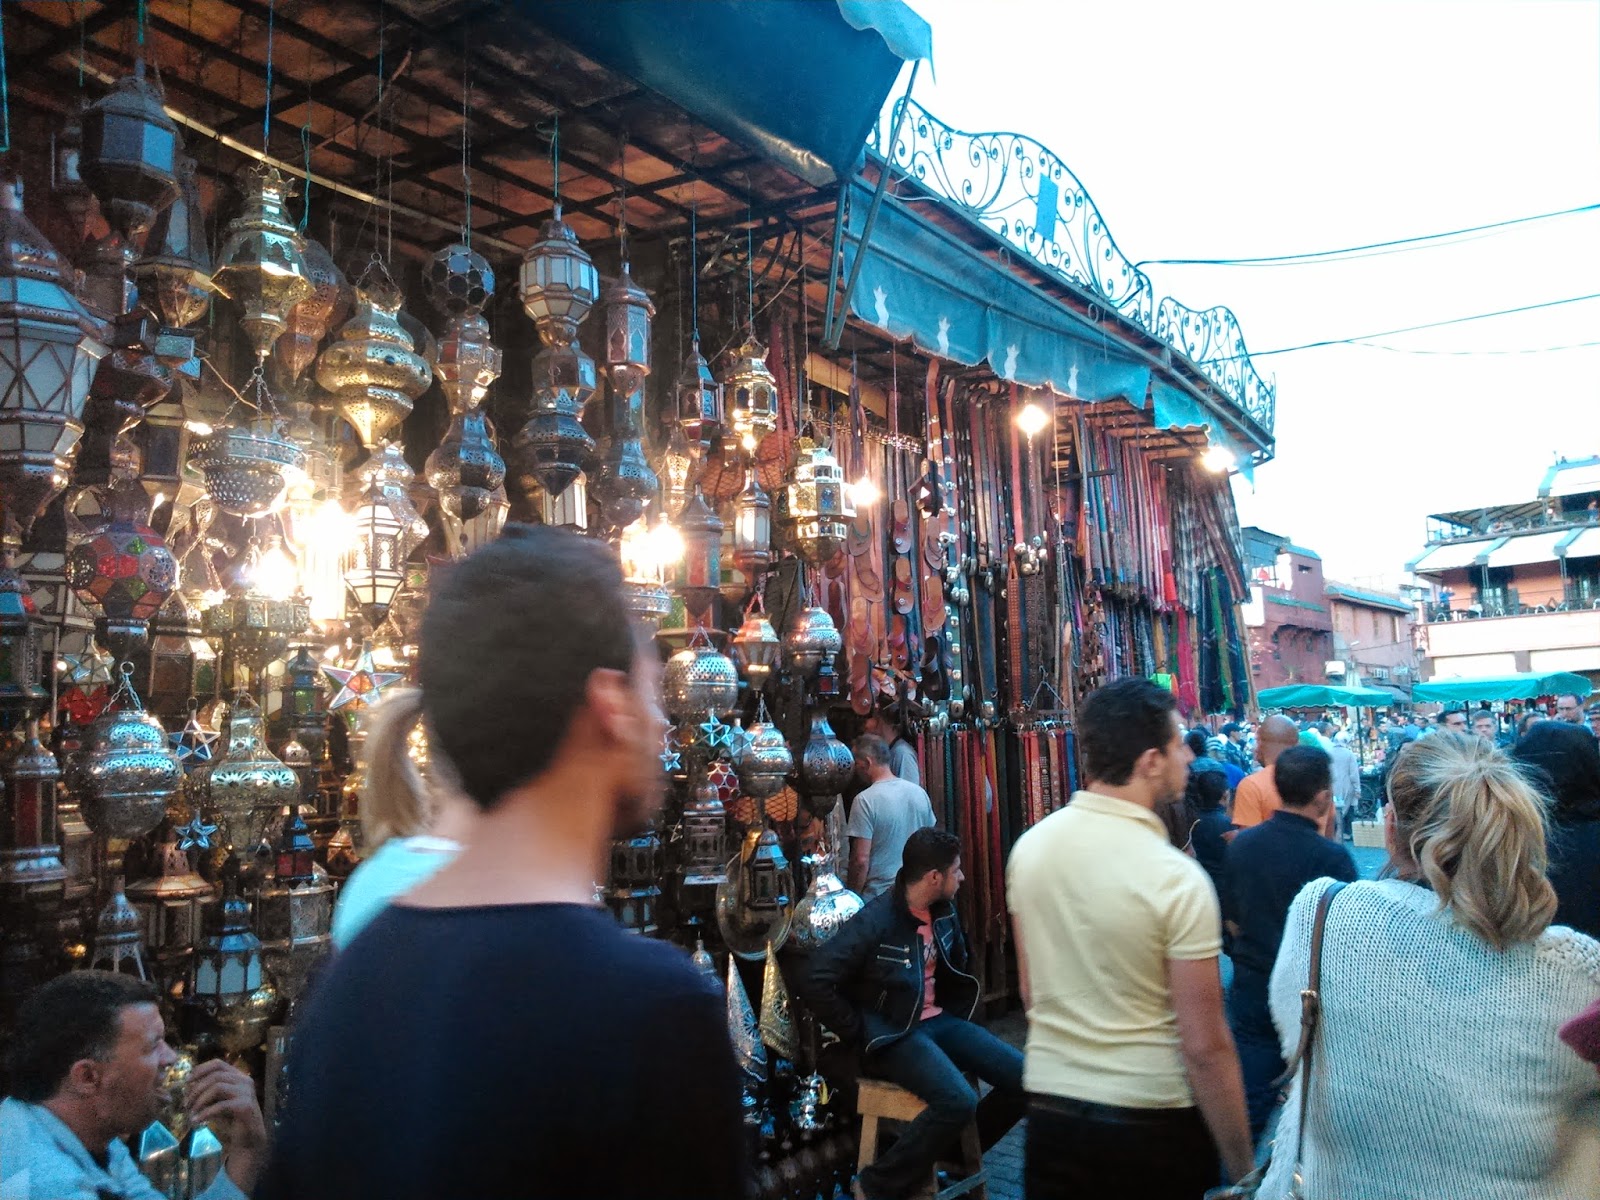 Ruta de 6 días por el sur de Marruecos - Blogs de Marruecos - De Marrakech a Chegaga (18)